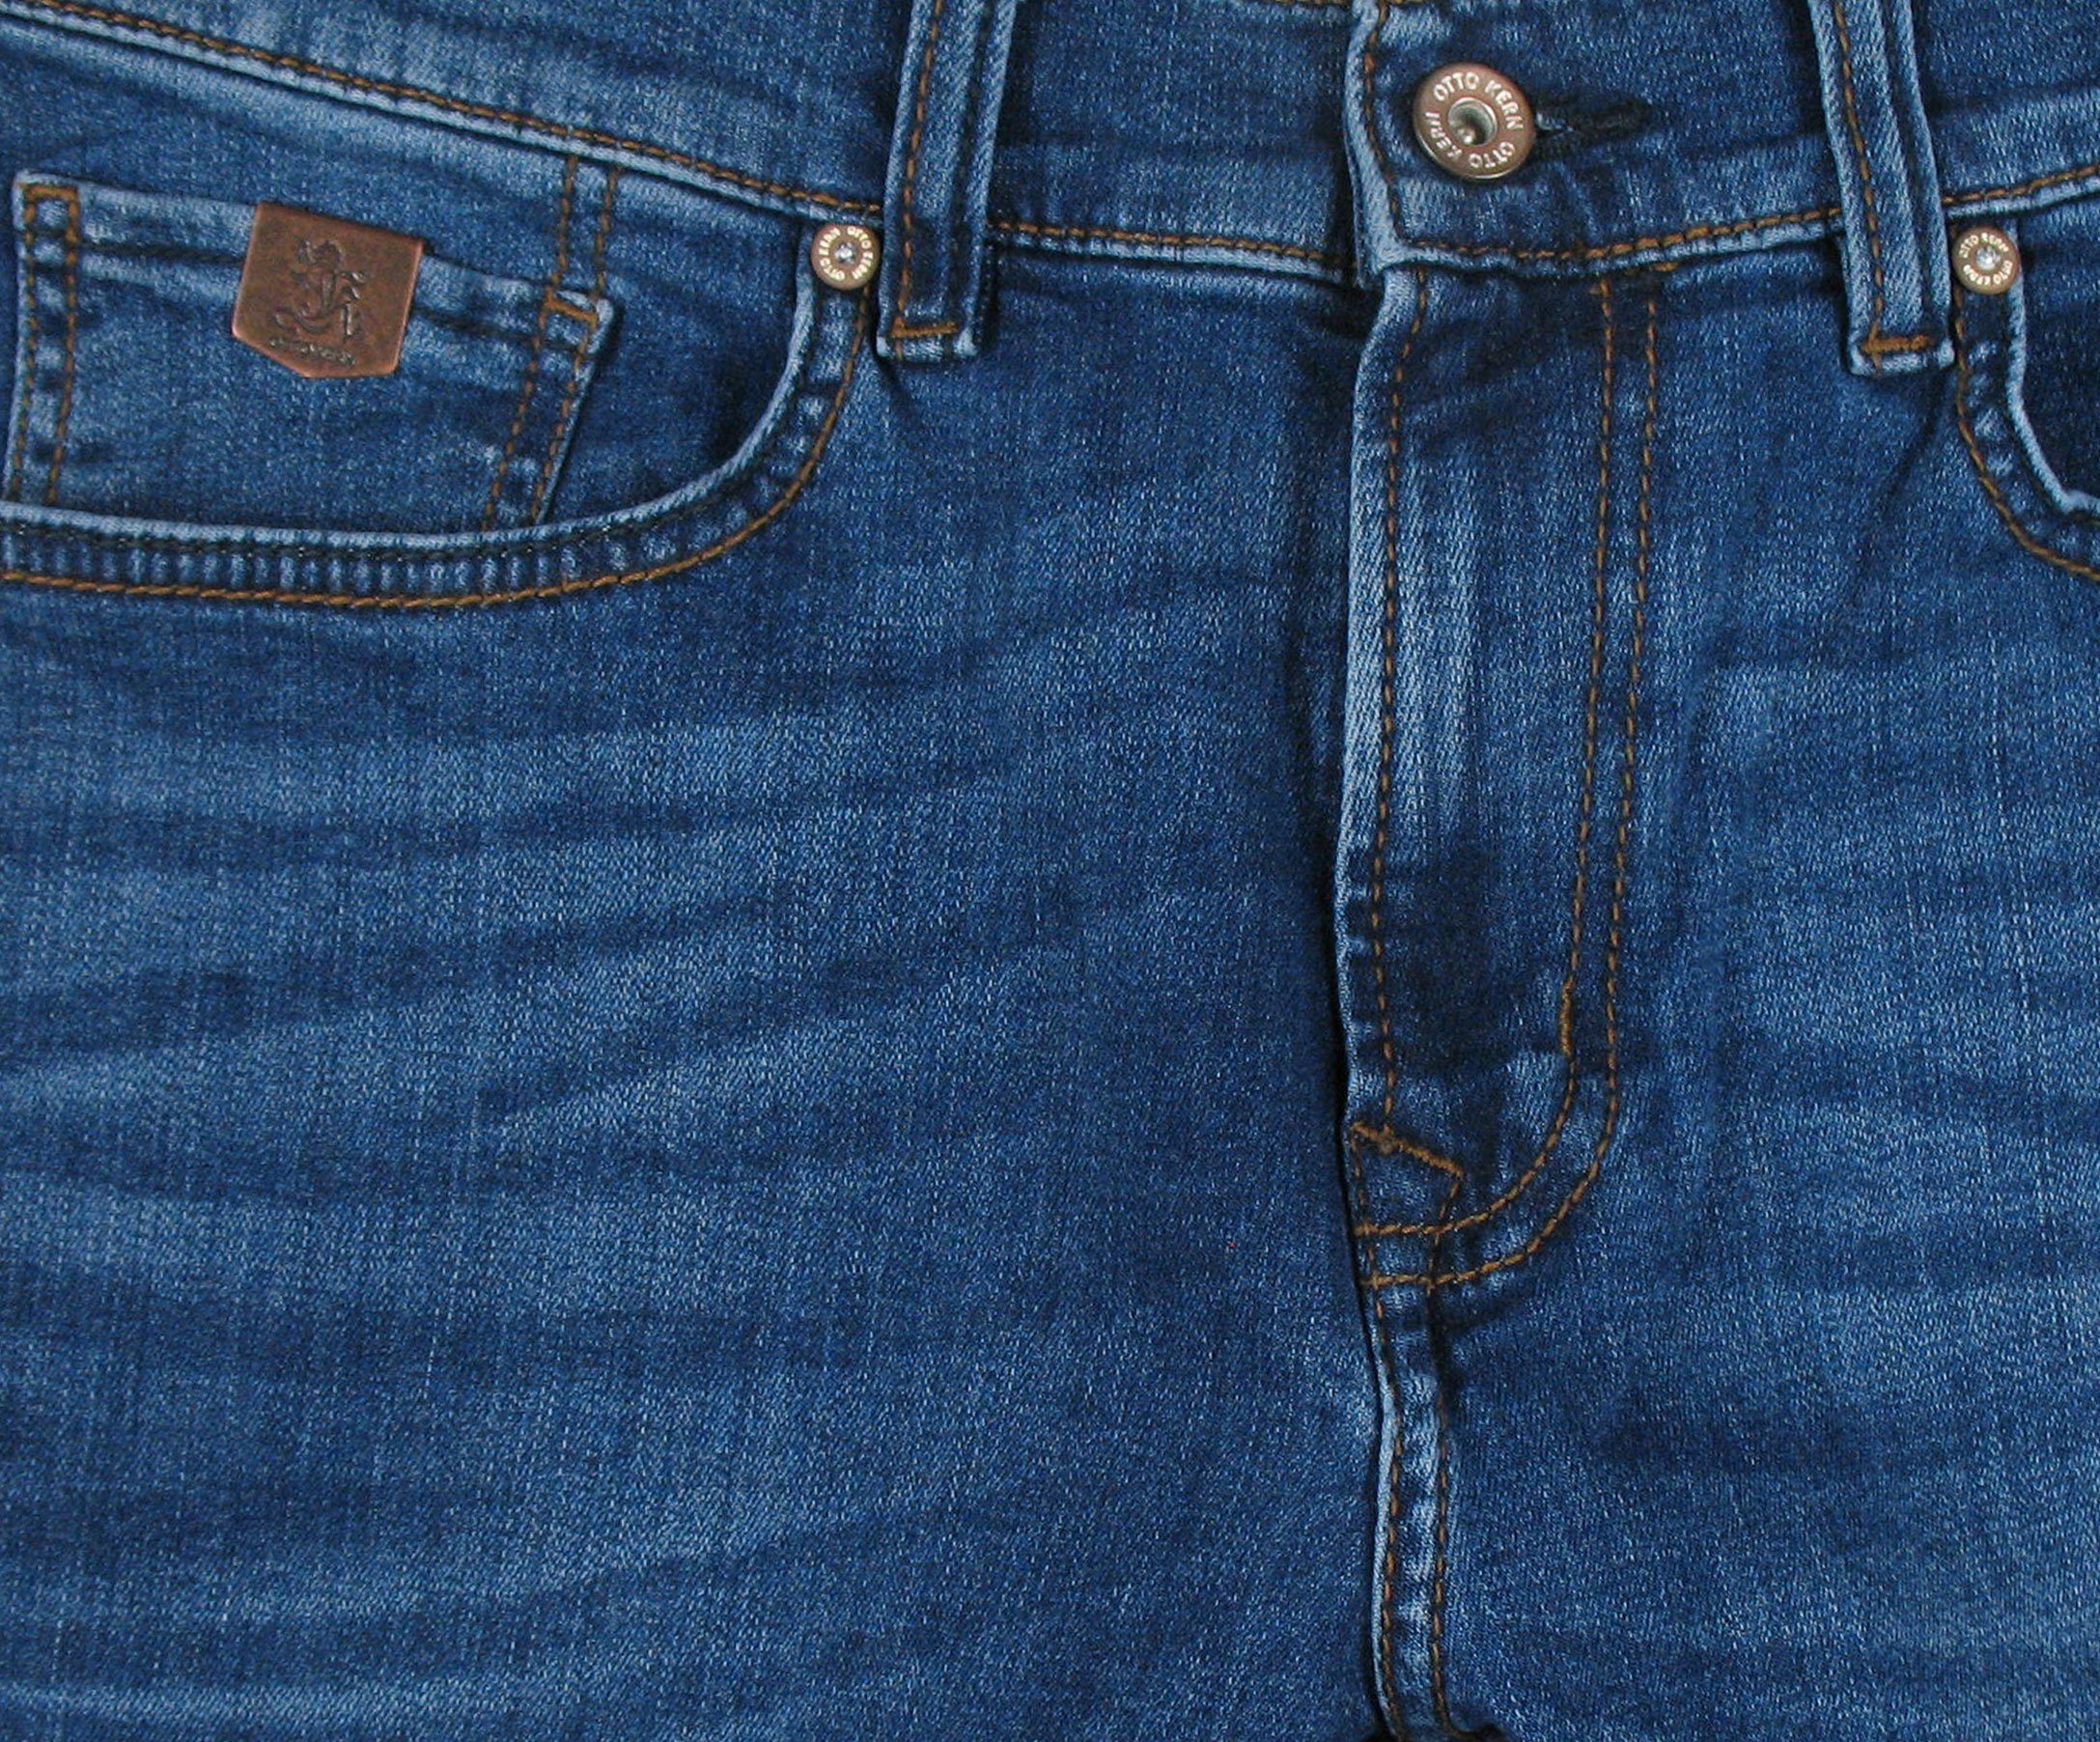 Otto Kern Kern 5-Pocket-Jeans Flex Denim Pure Ocean John Blue